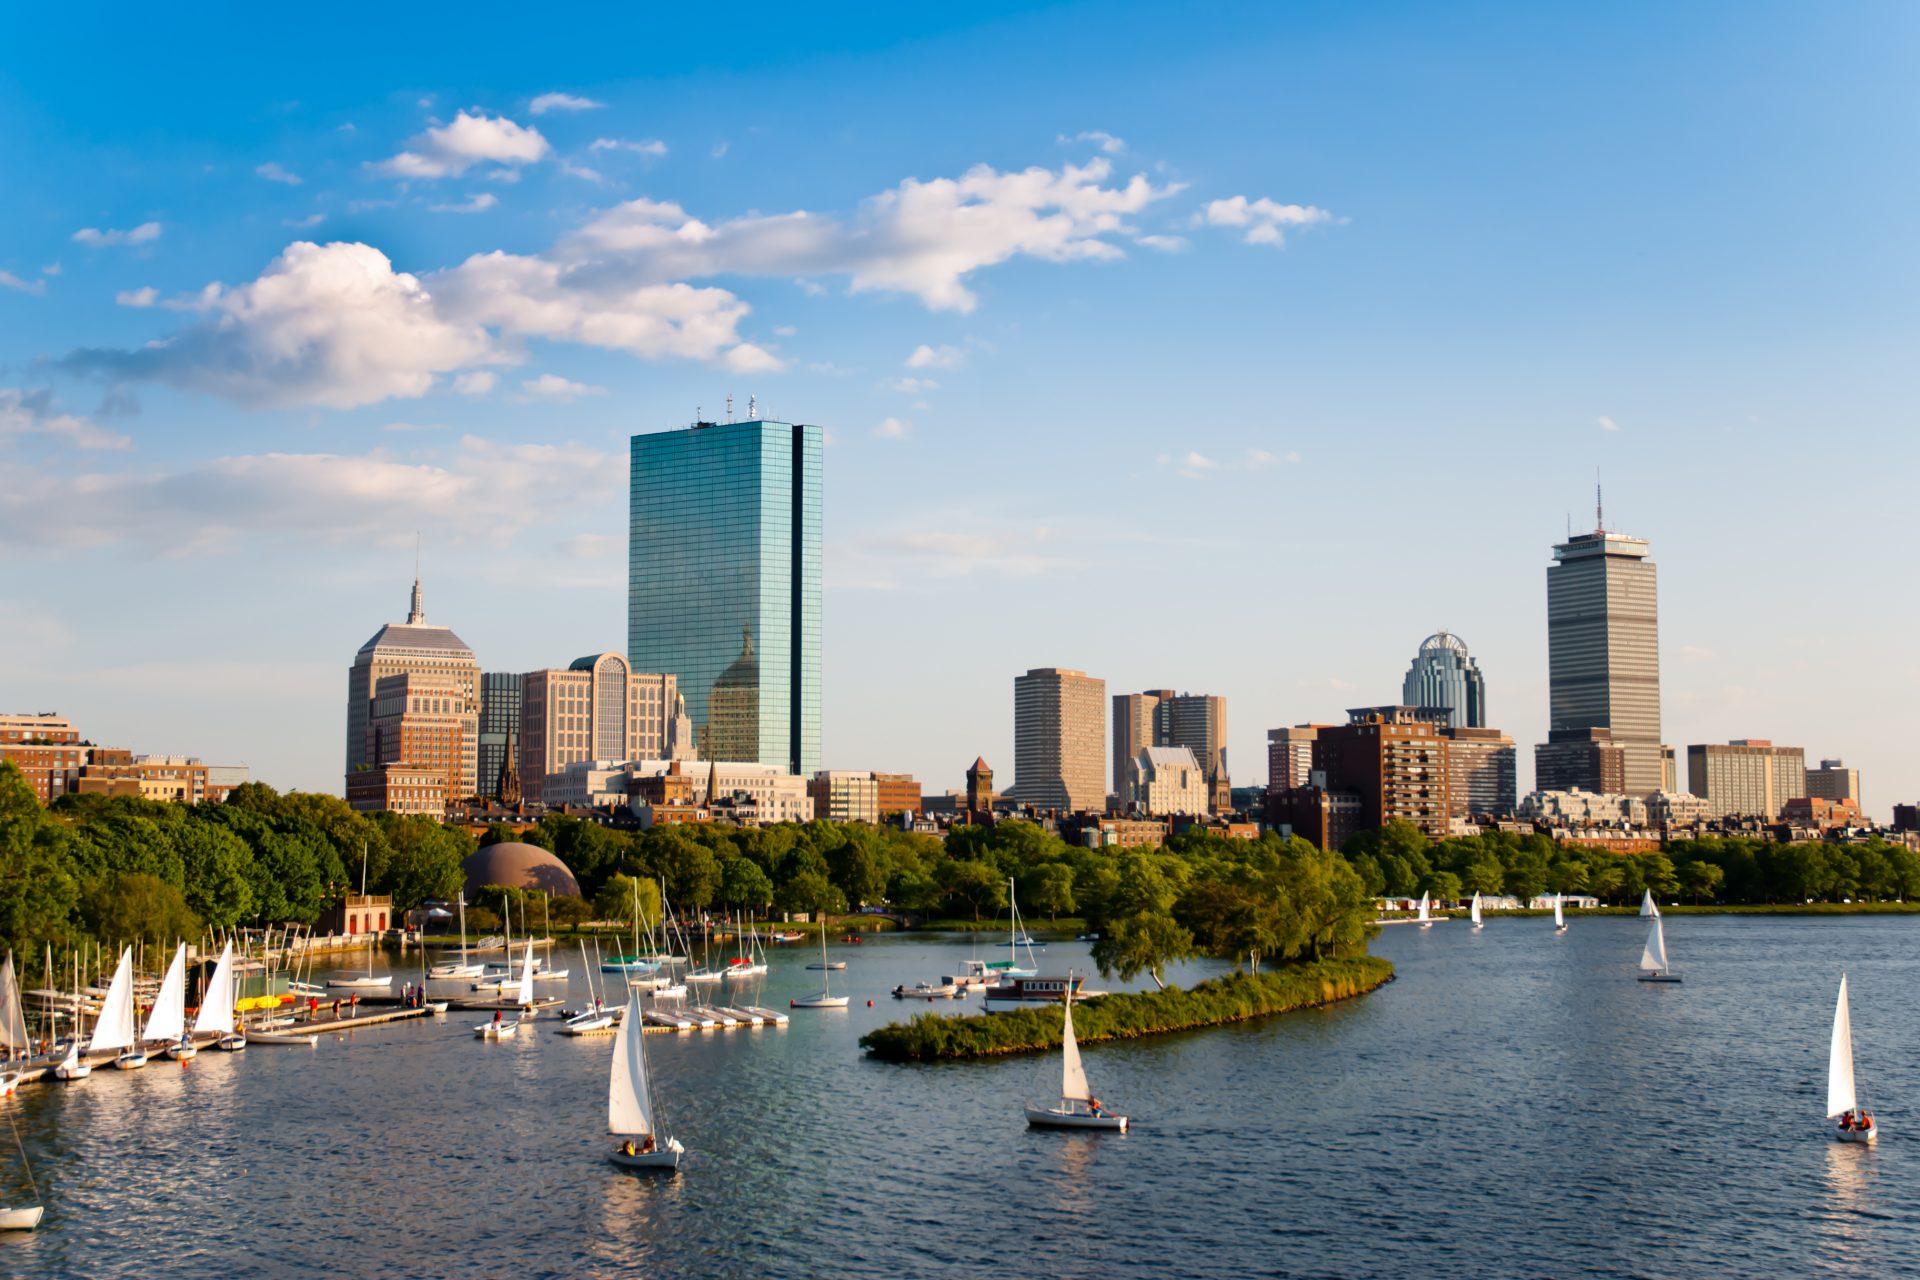 3. Boston, United States